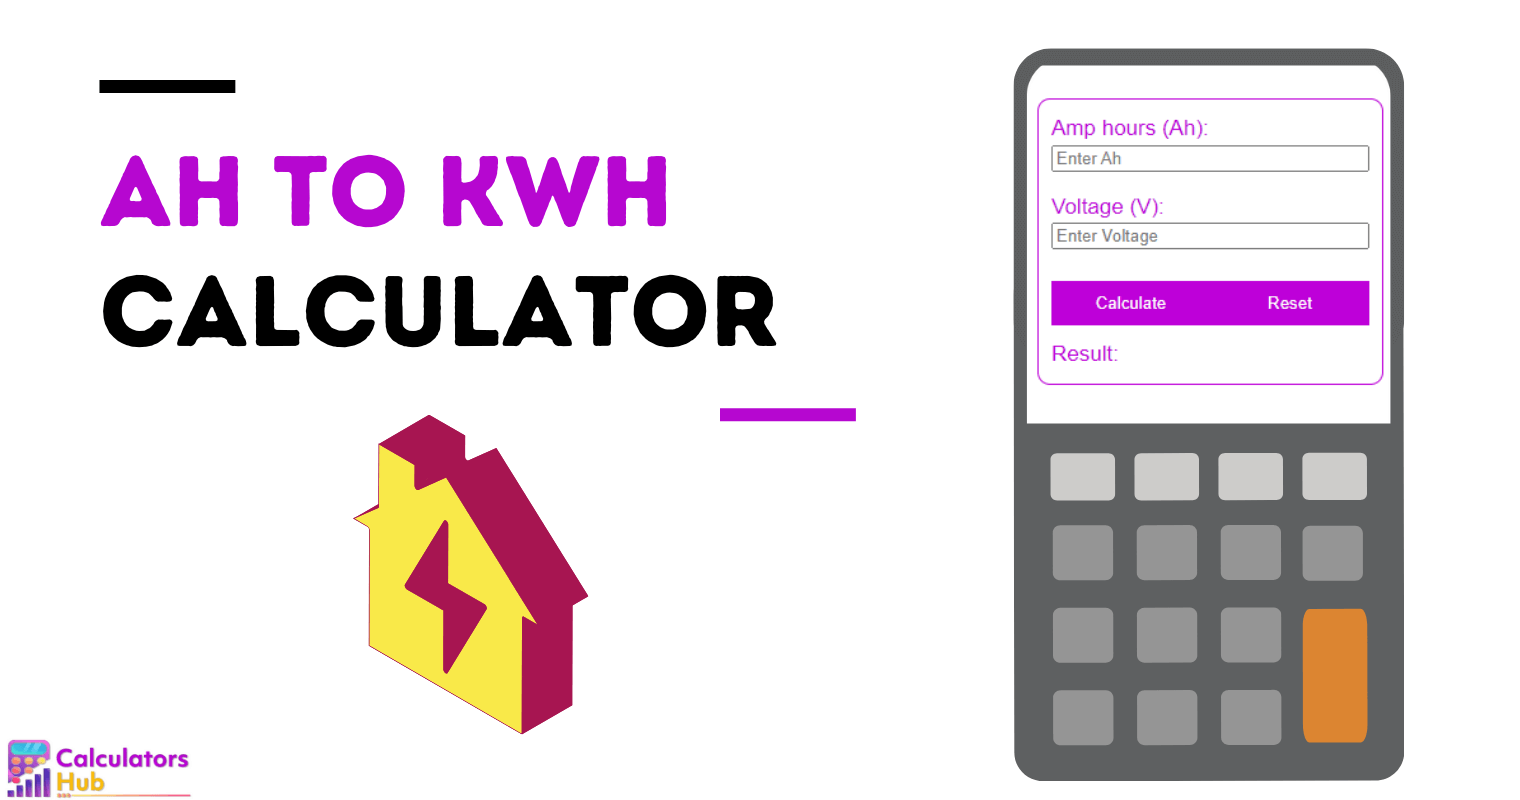 Ah to kWh Calculator